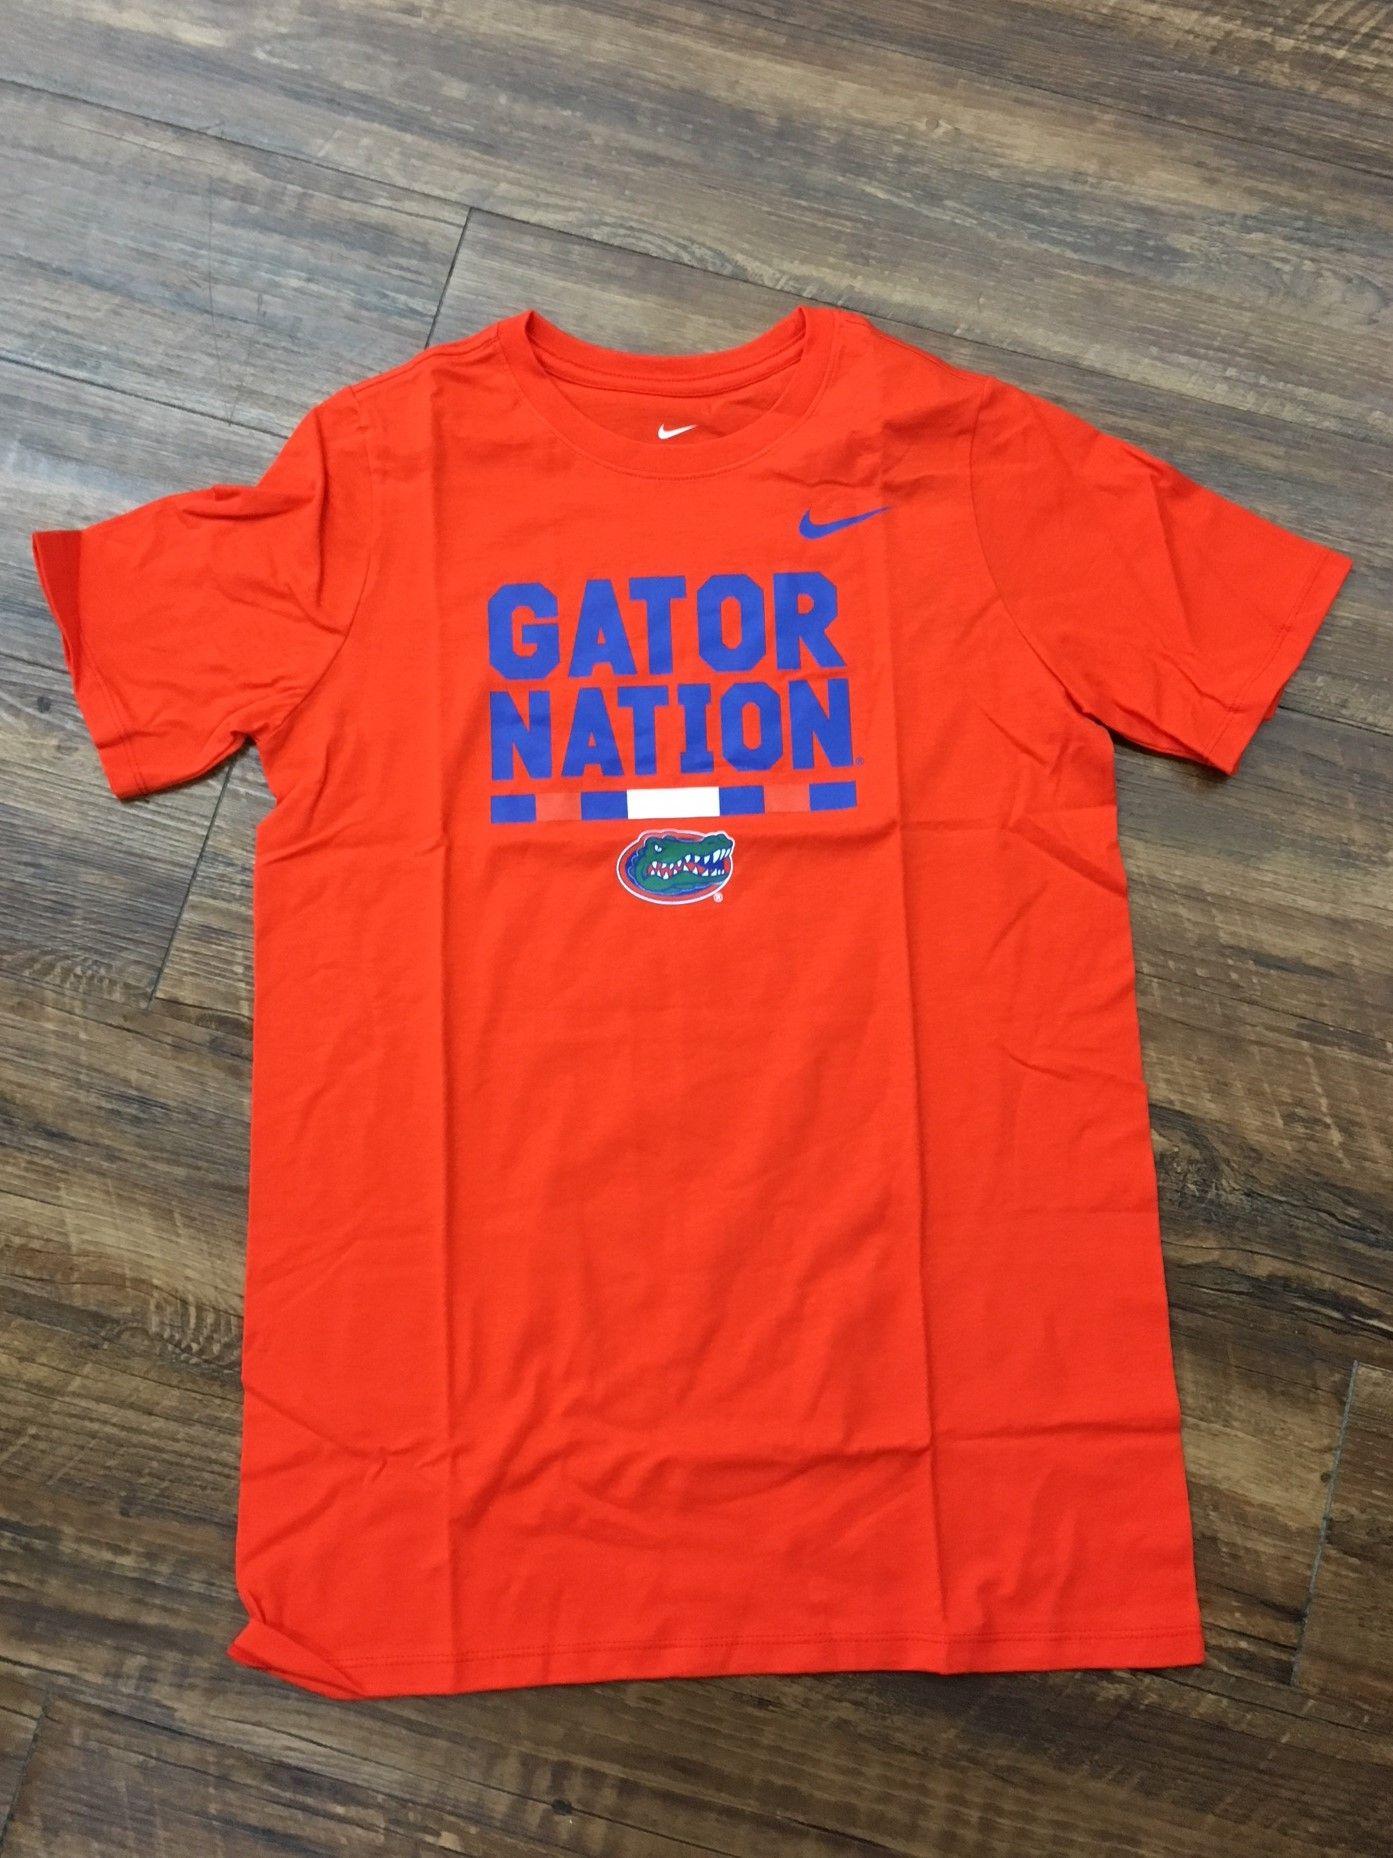 GatorNation Logo - Florida Gator Nation Youth Nike Cotton Tee